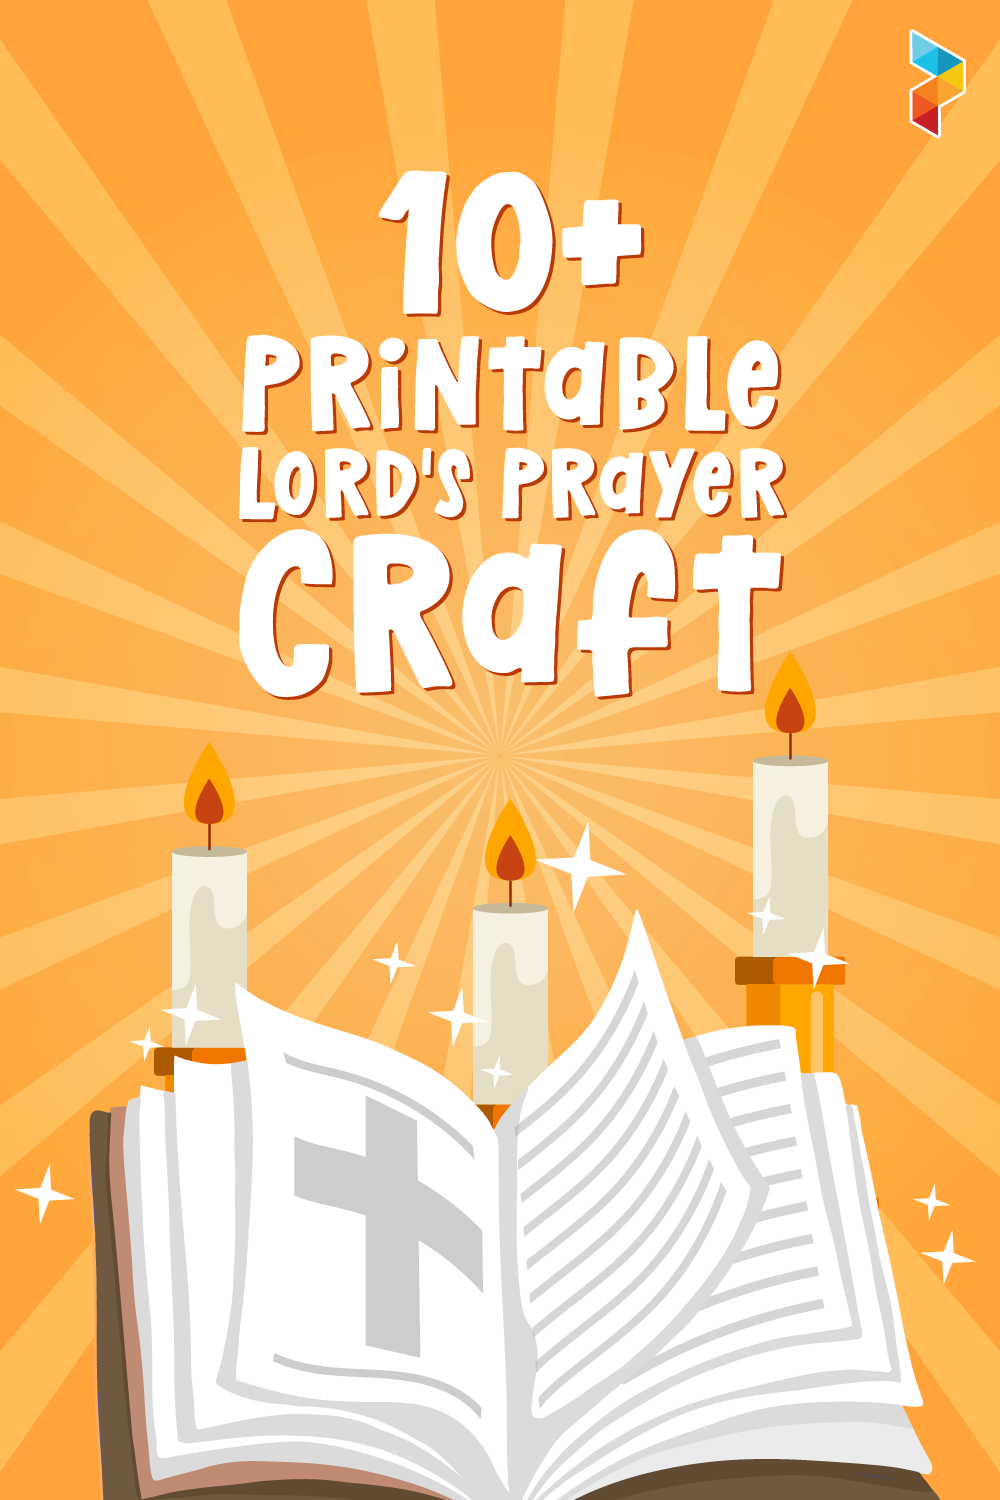 Lord's Prayer Craft